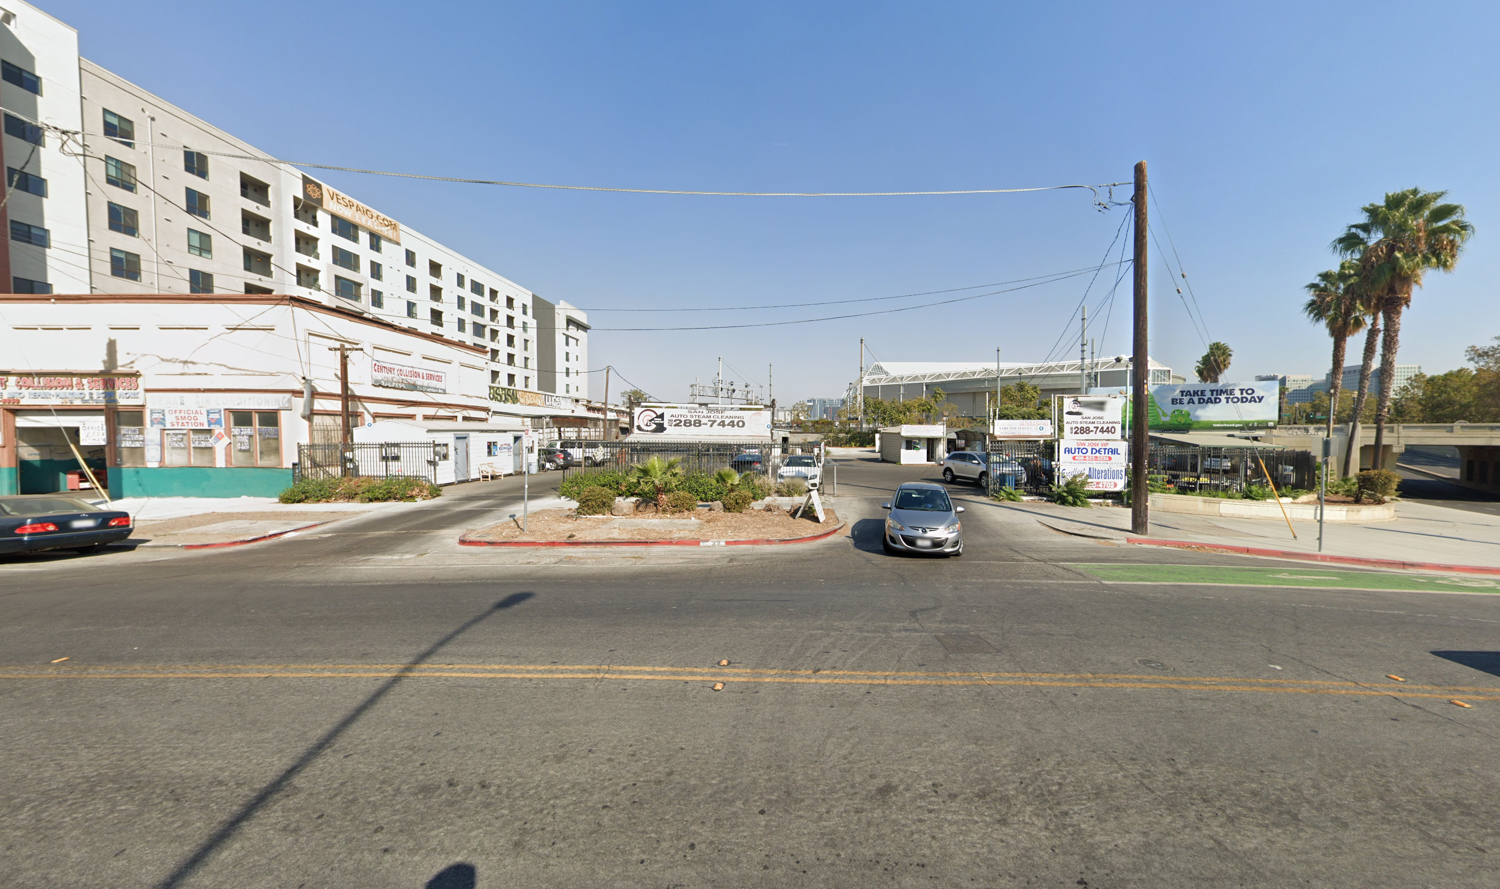 32 Stockton Avenue, image via Google Street View